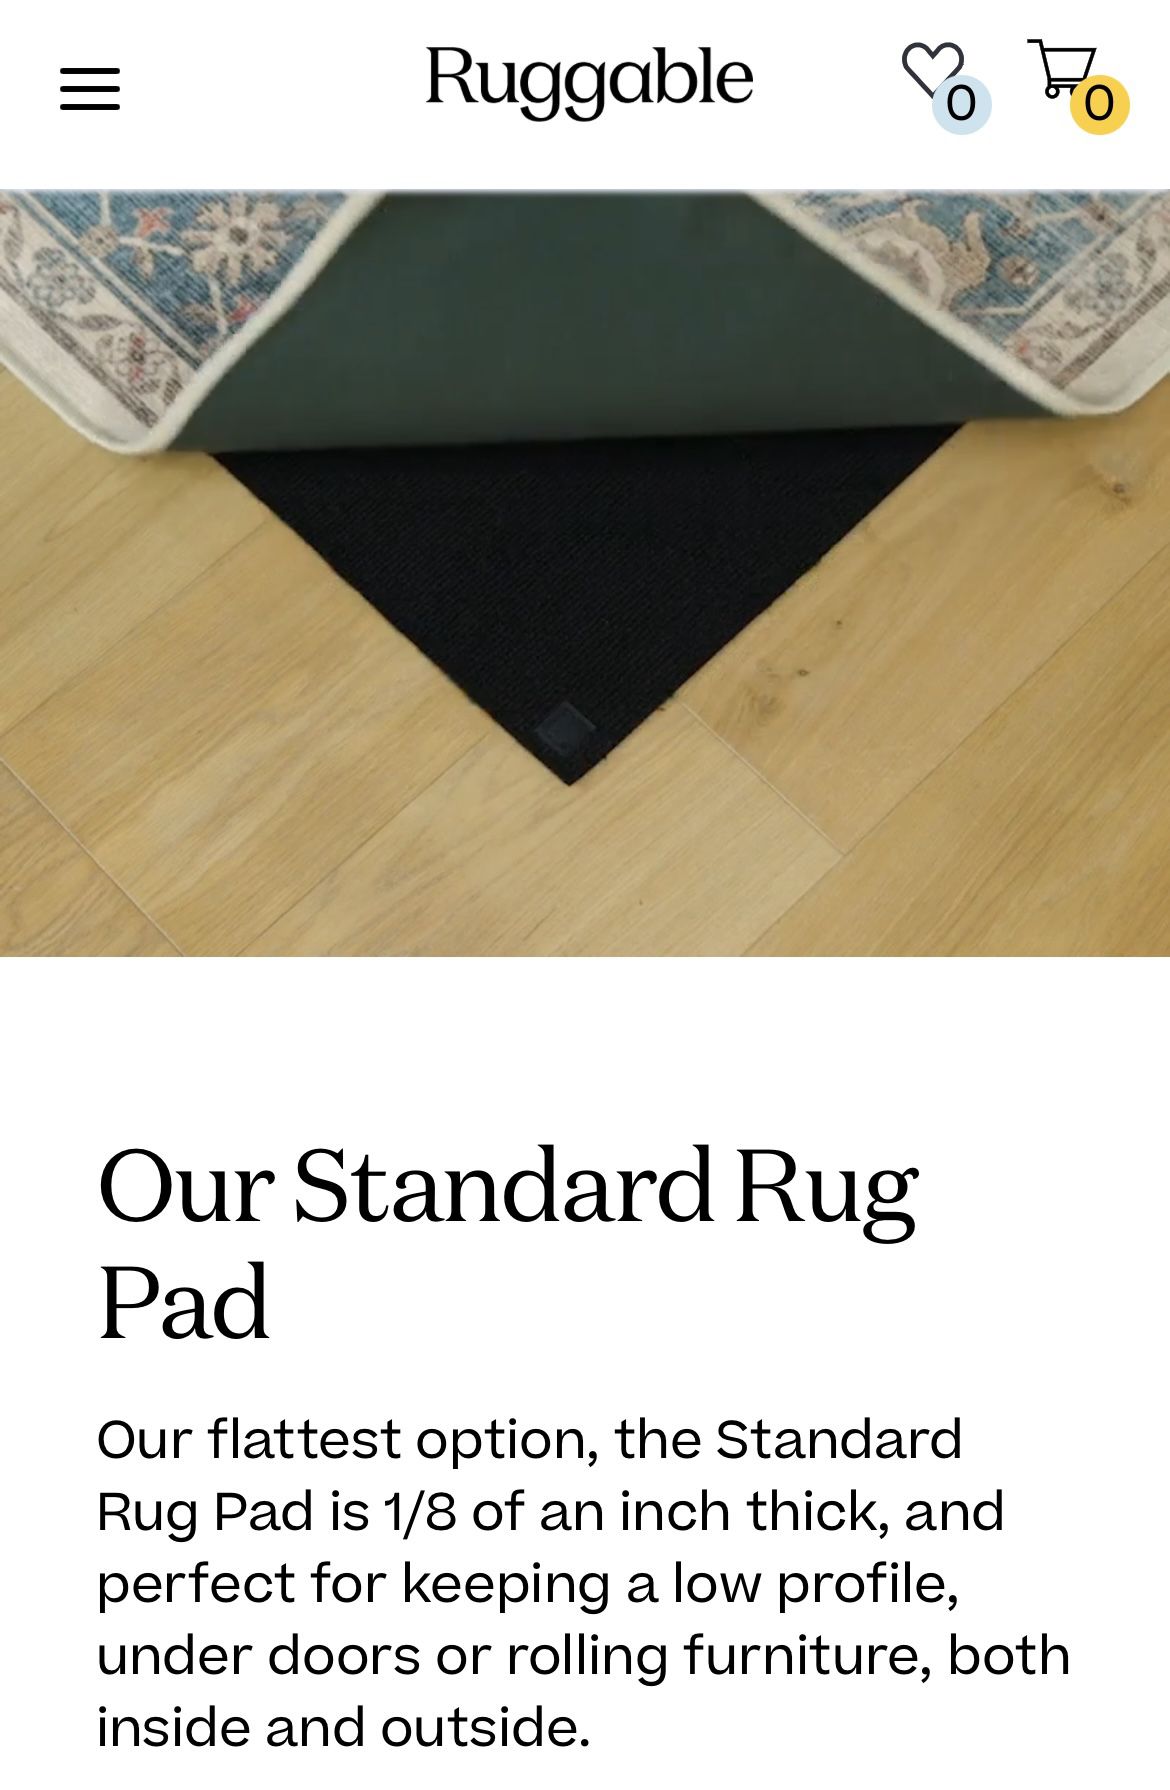 Standard Rug Pad